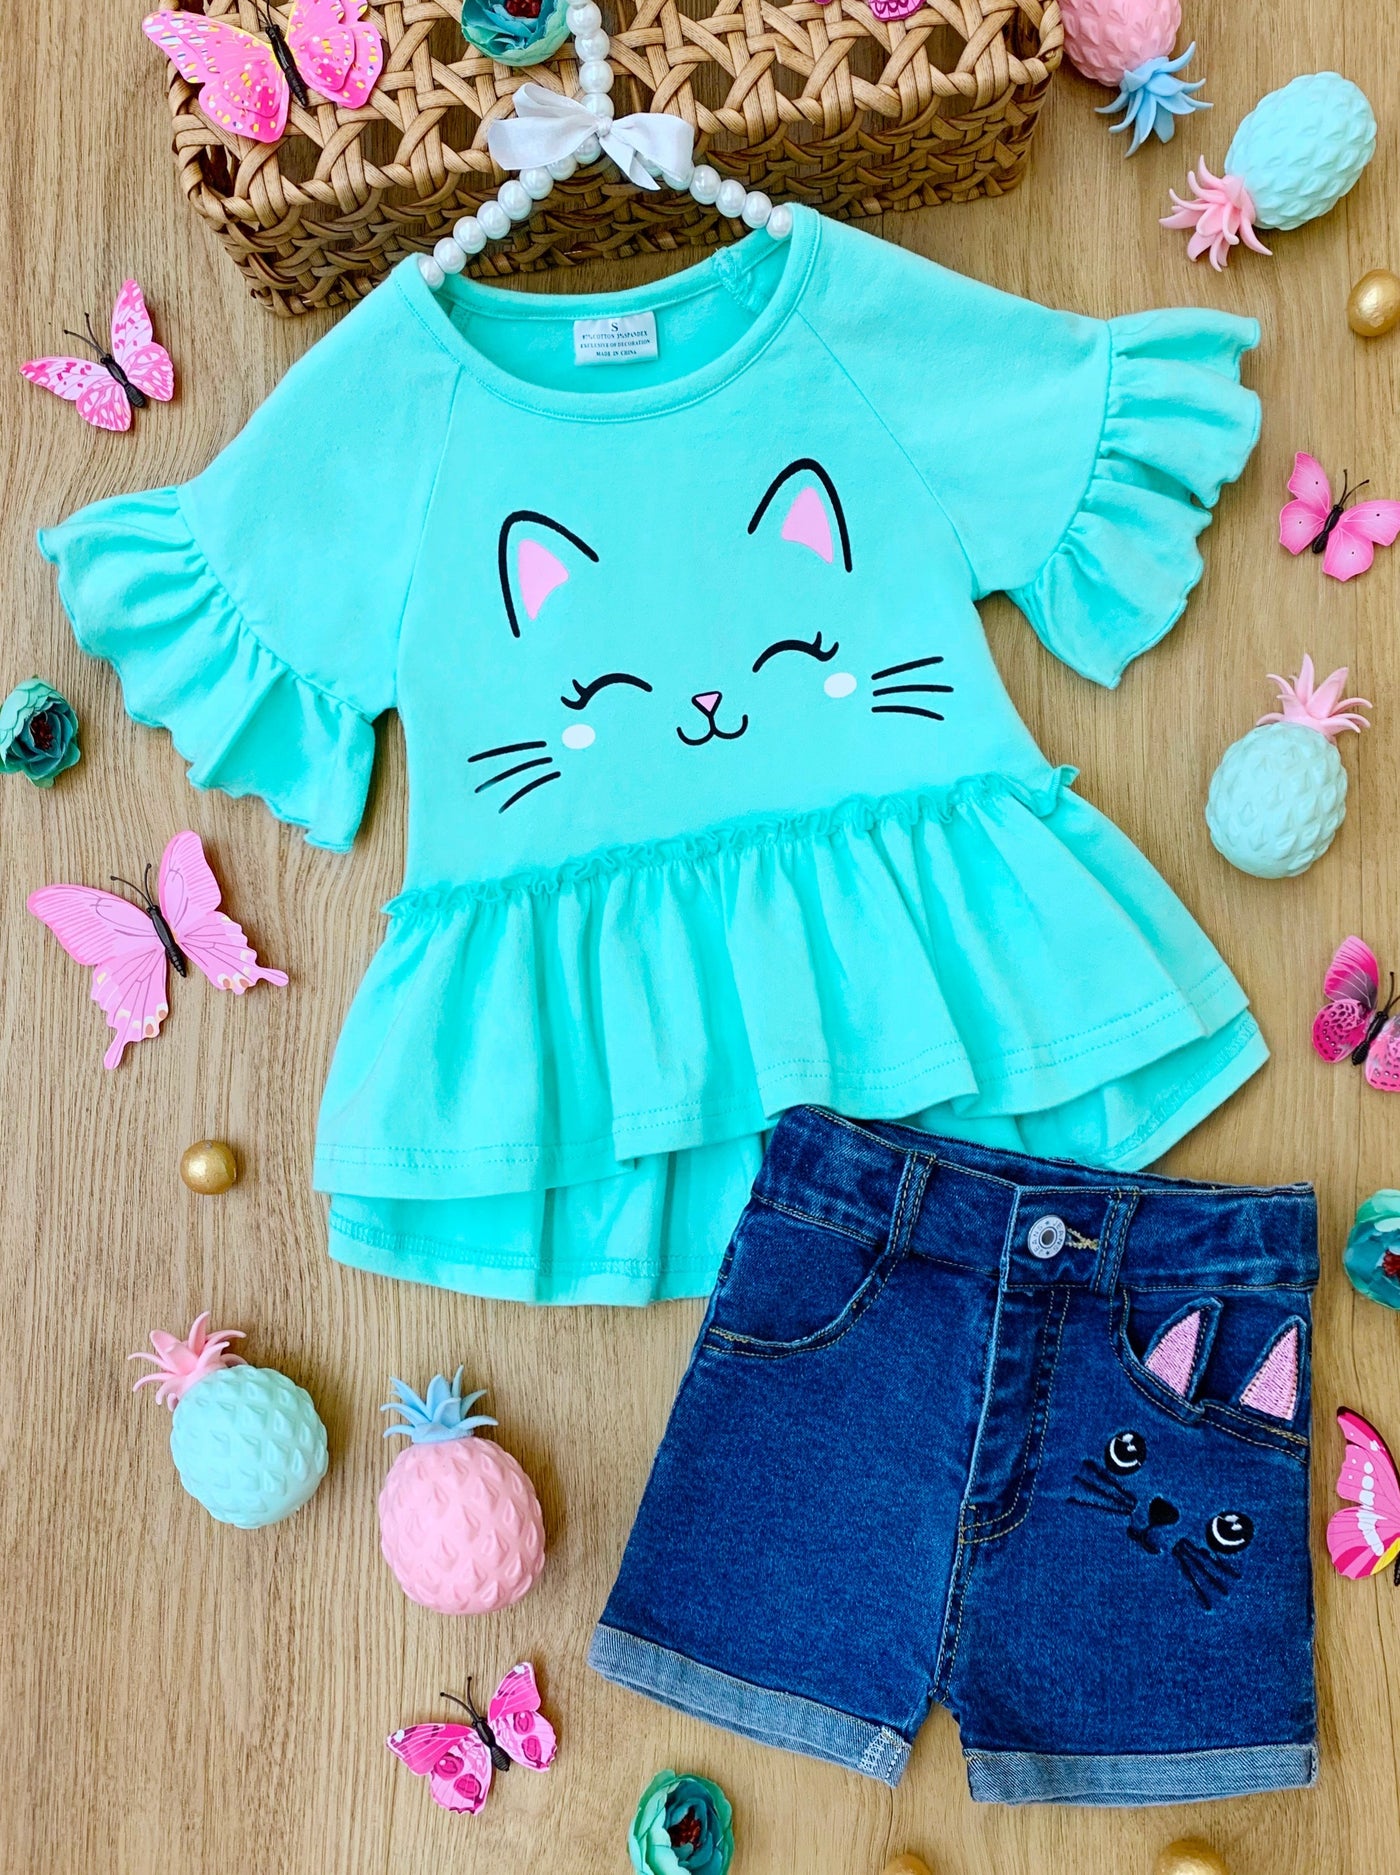 Girls Spring Outfits | Ruffle Kitten Top & Cuffed Jean Shorts Set